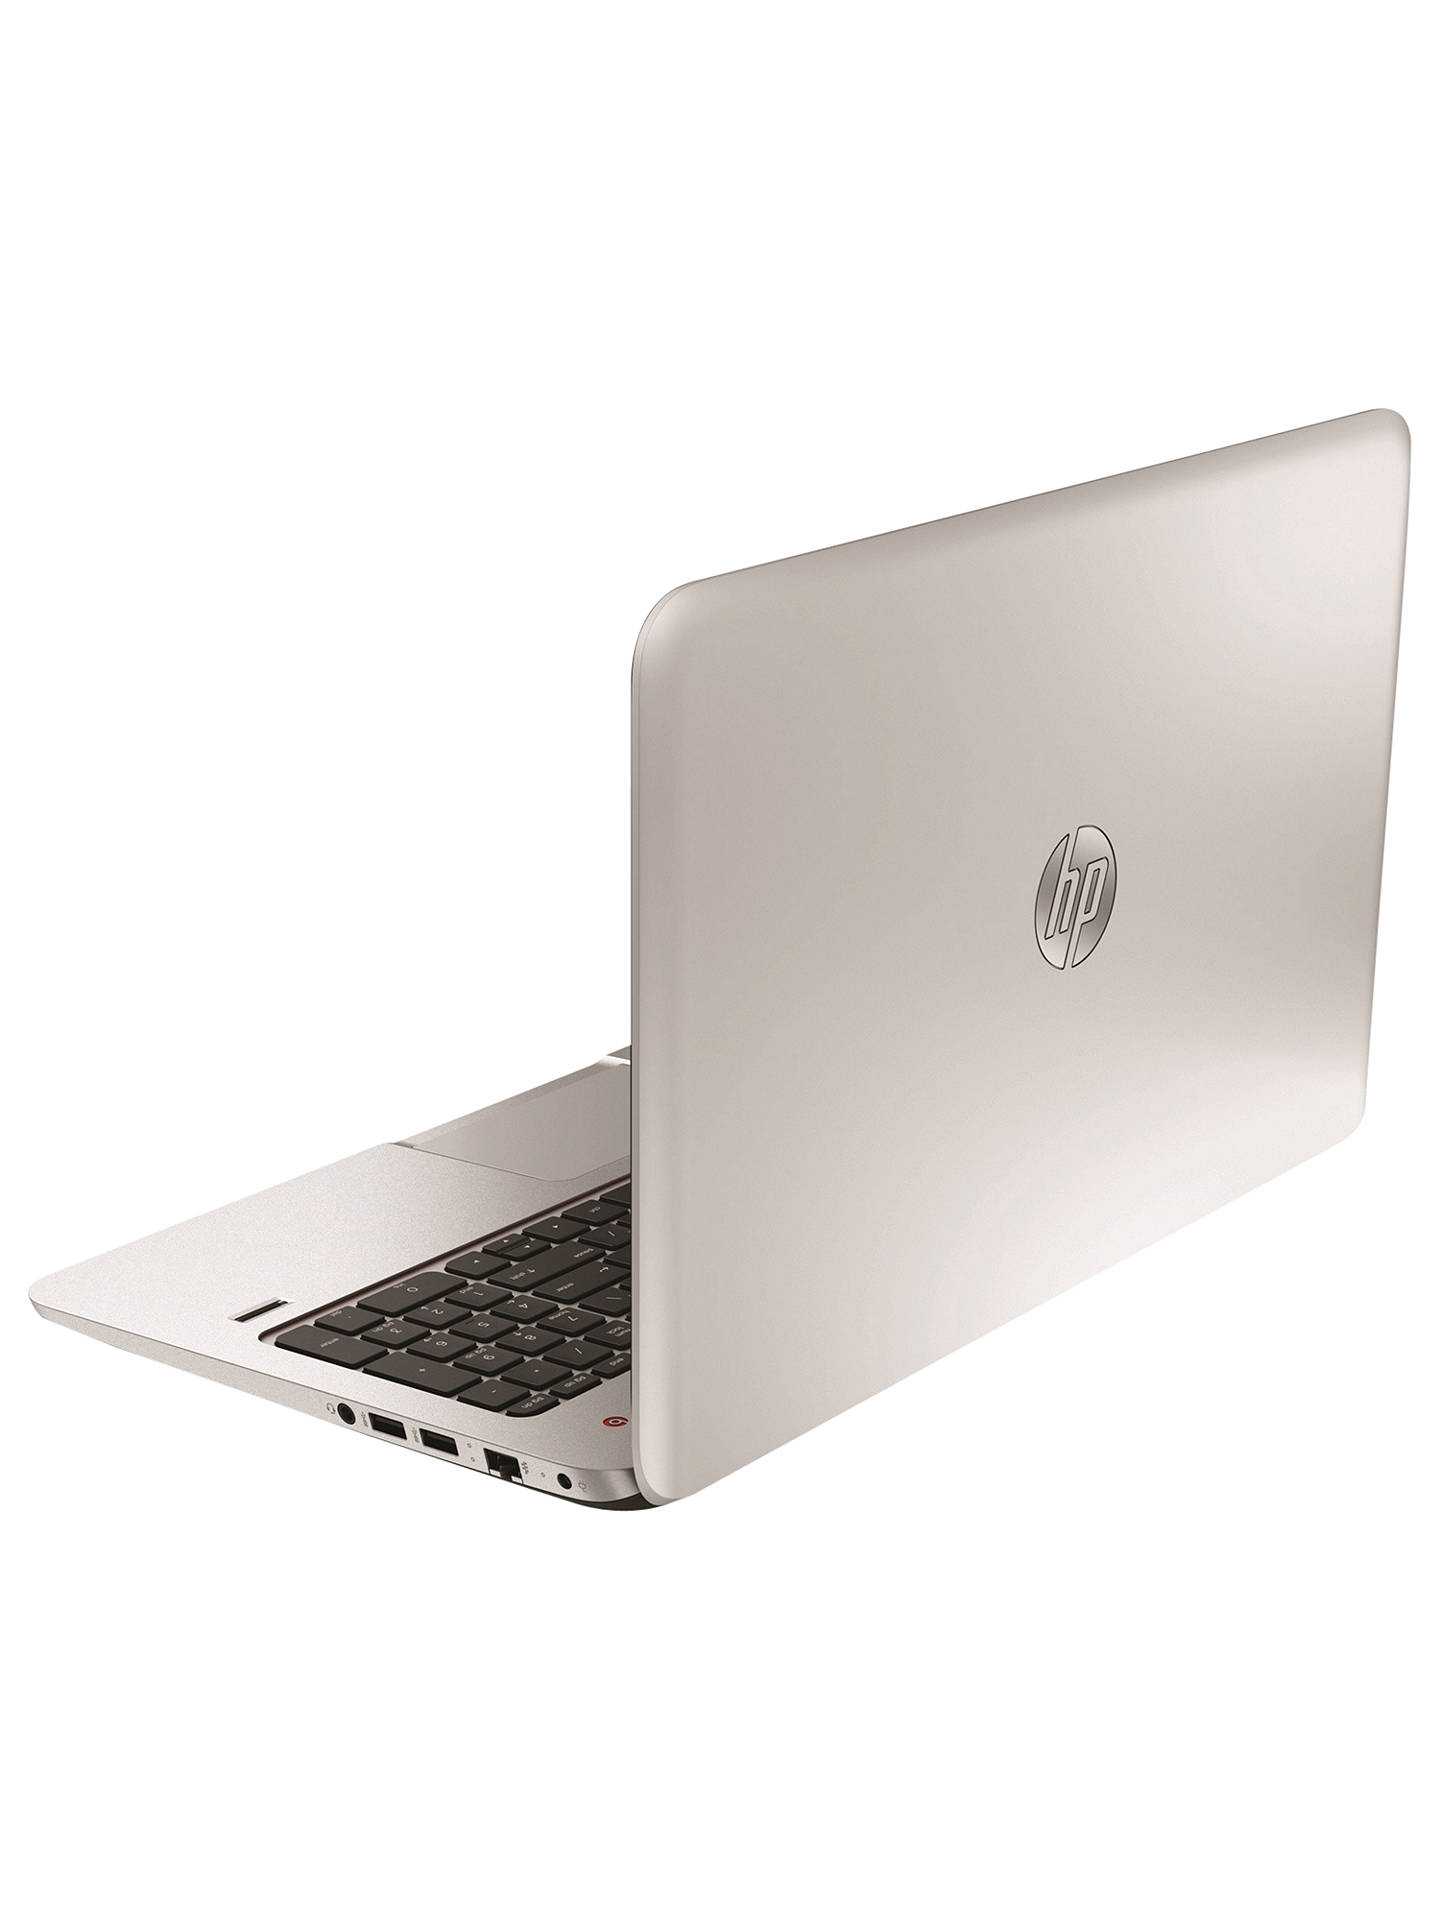 Ноутбук hp envy 17-j116sr (f7t15ea) — купить, цена и характеристики, отзывы